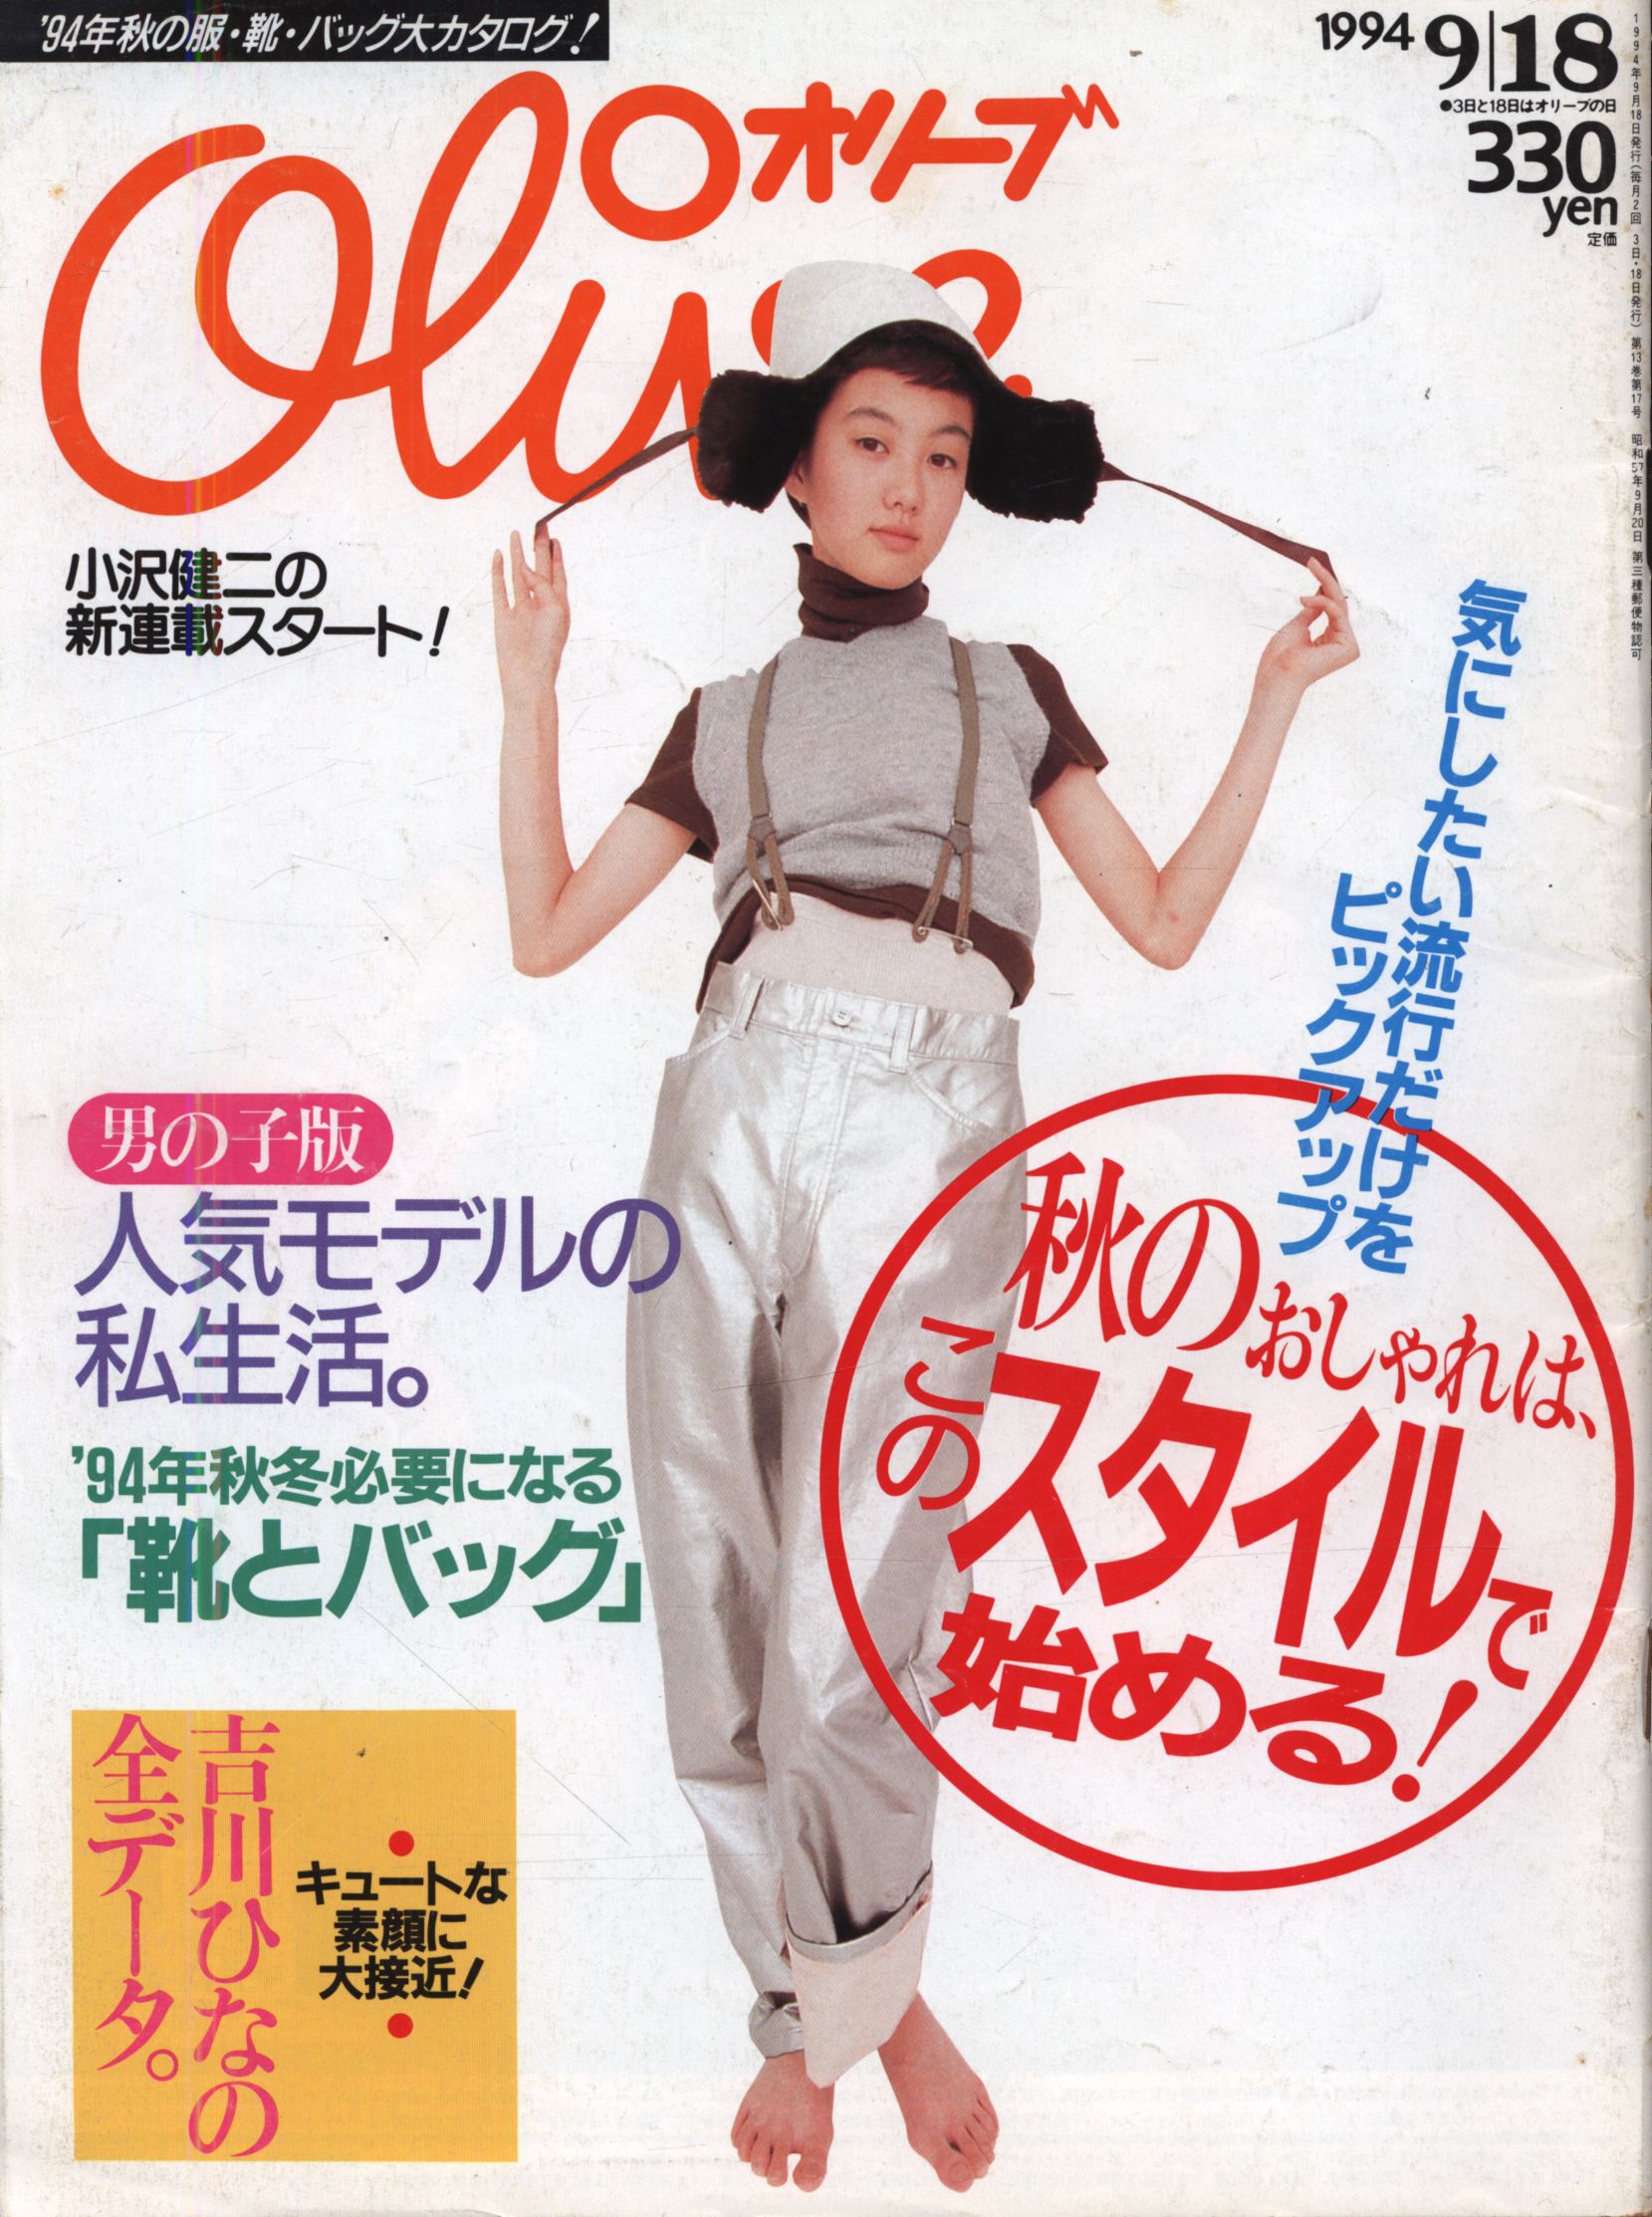 1994 Olive オリーブ 古本 - 雑誌